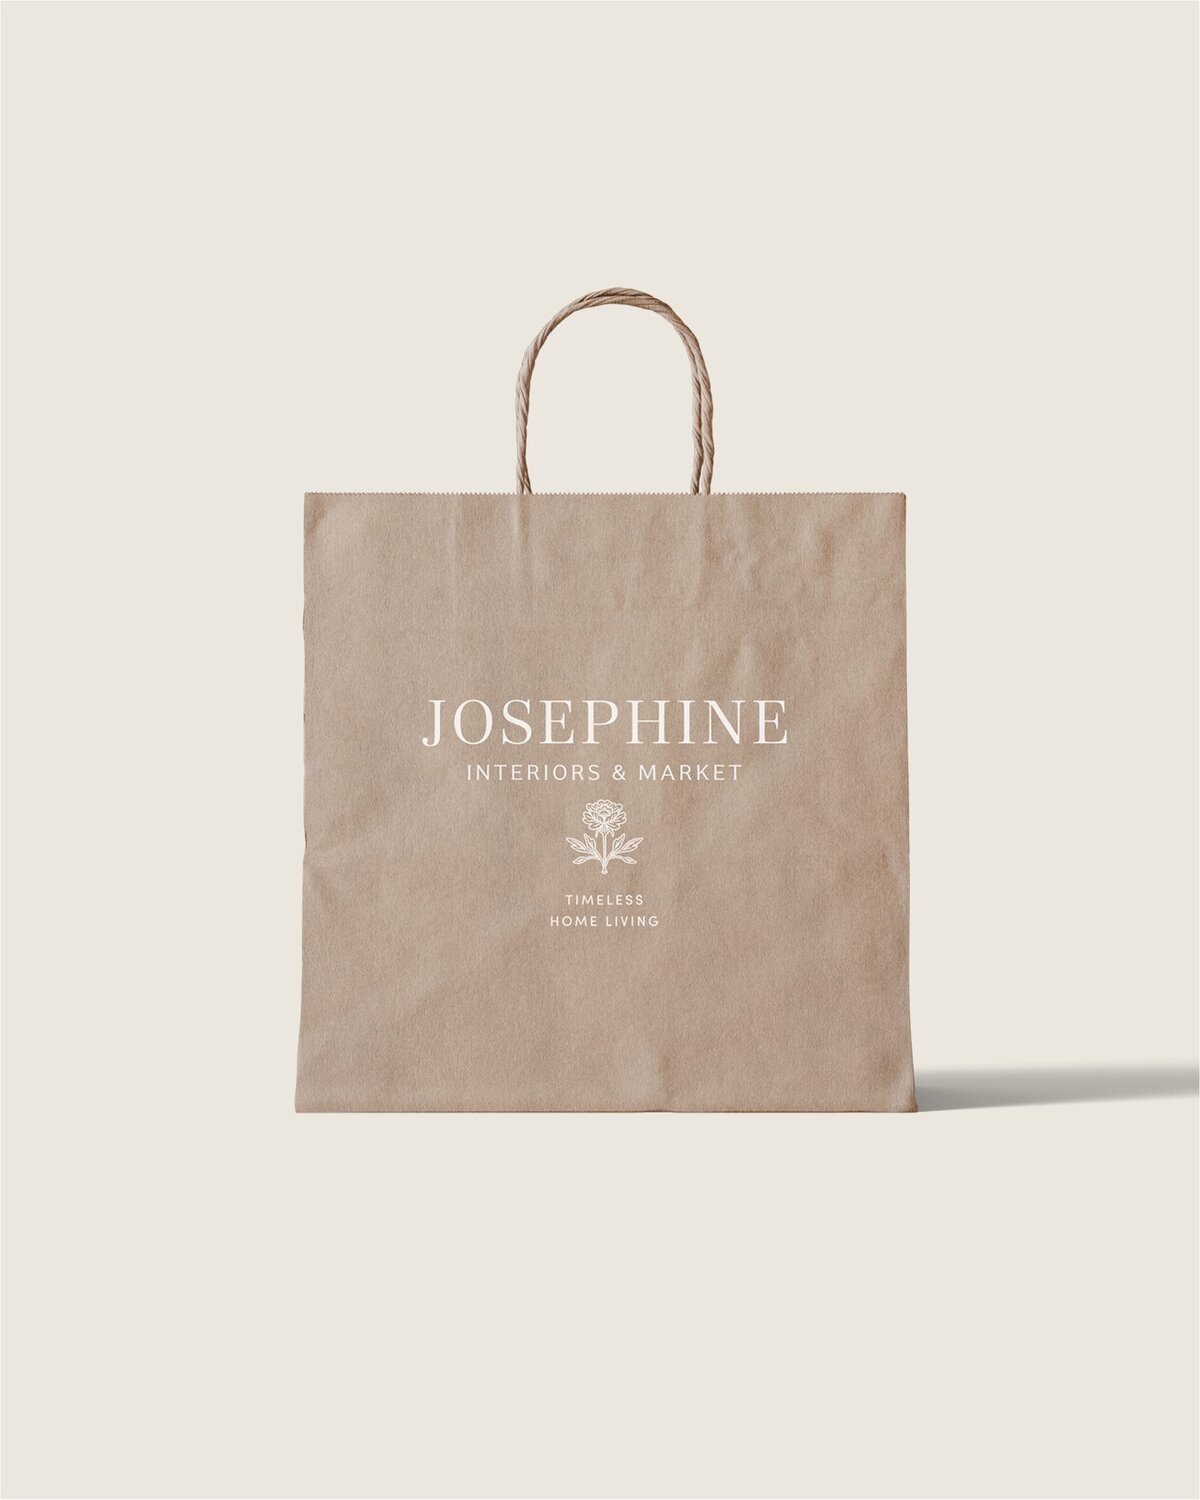 JosephineInteriors&Market_LaunchGraphics_Instagram59